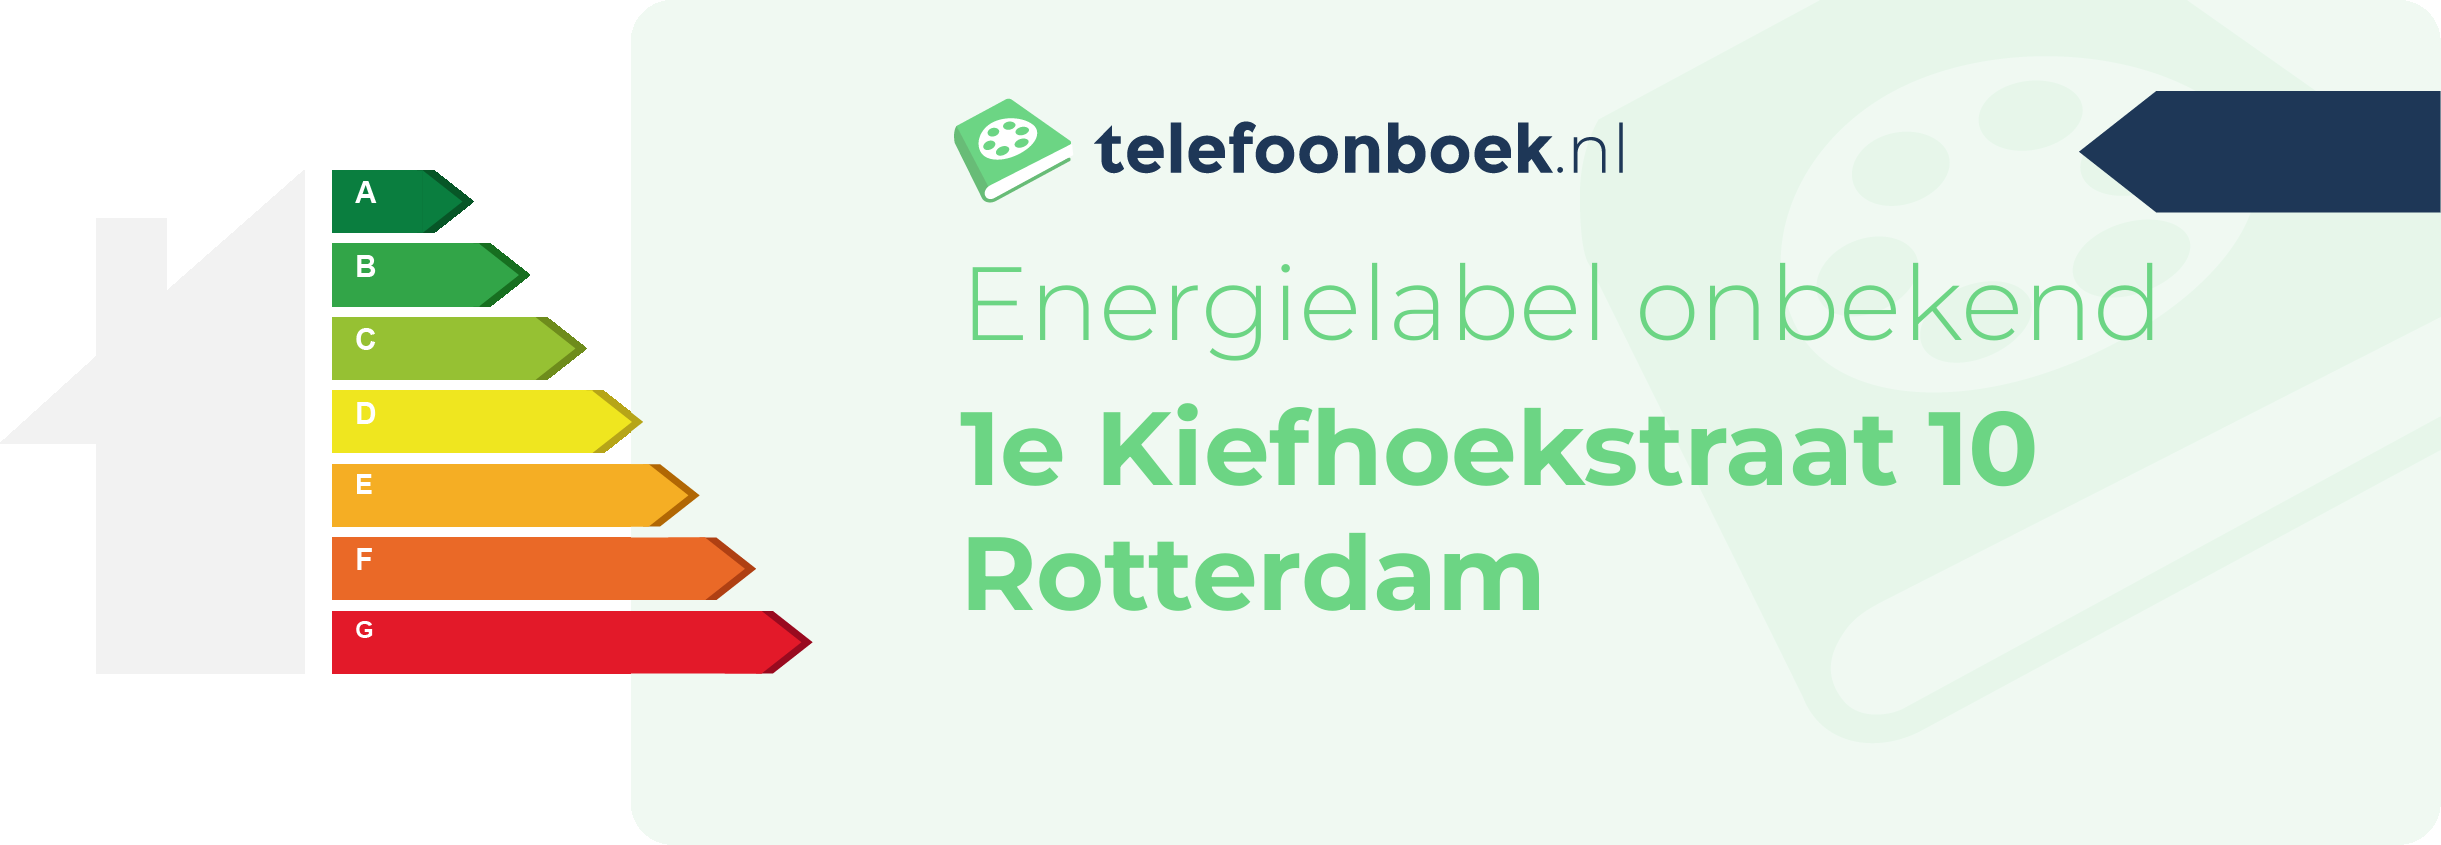 Energielabel 1e Kiefhoekstraat 10 Rotterdam